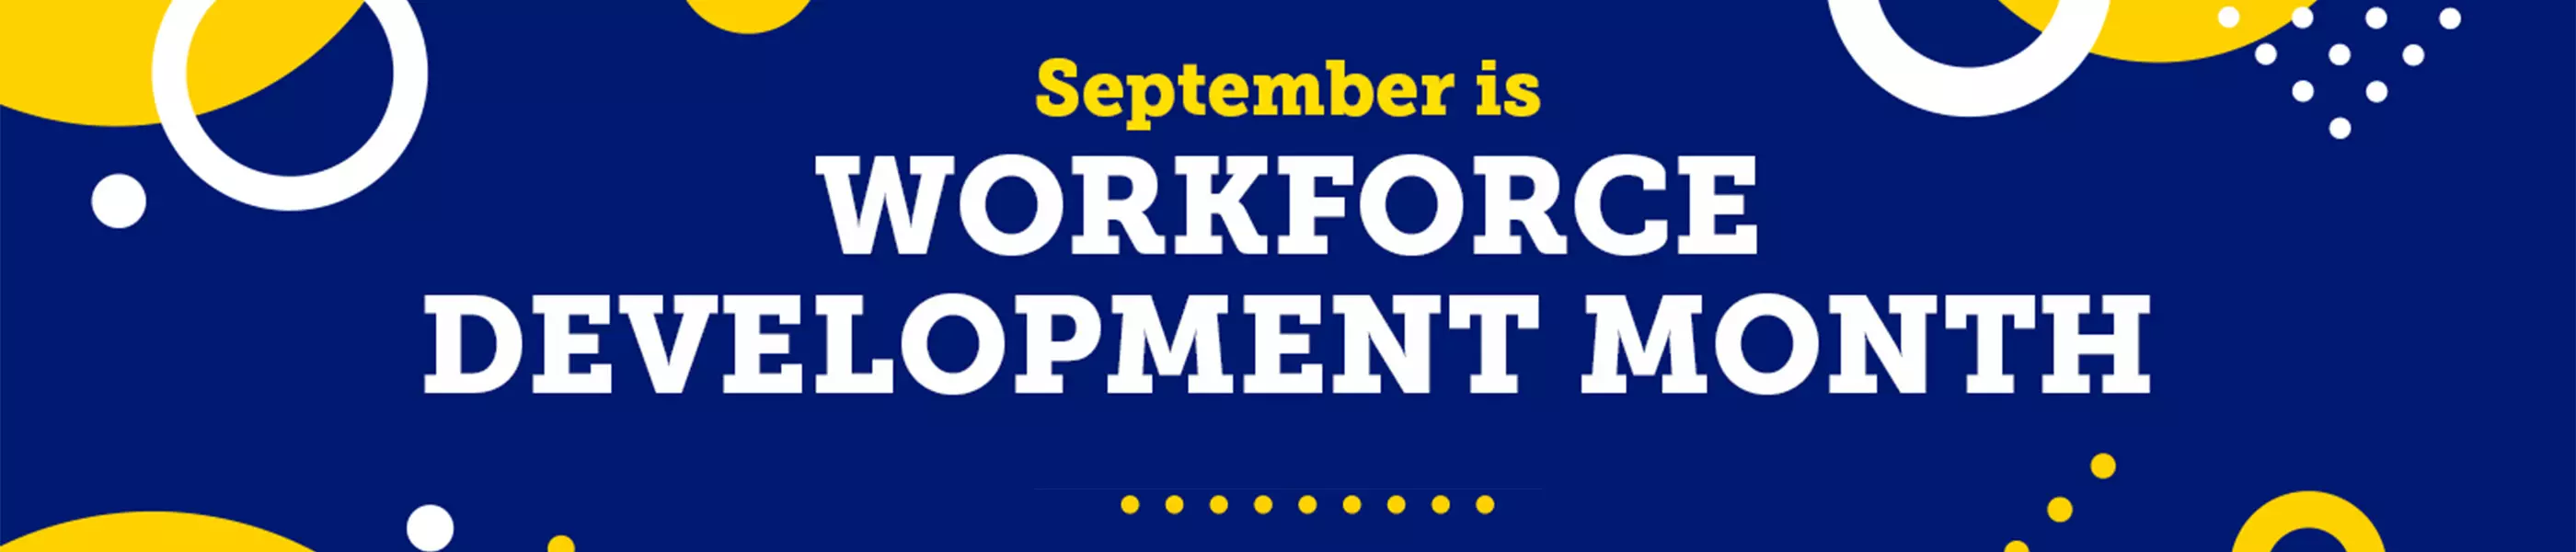 September is Workforce Development Month